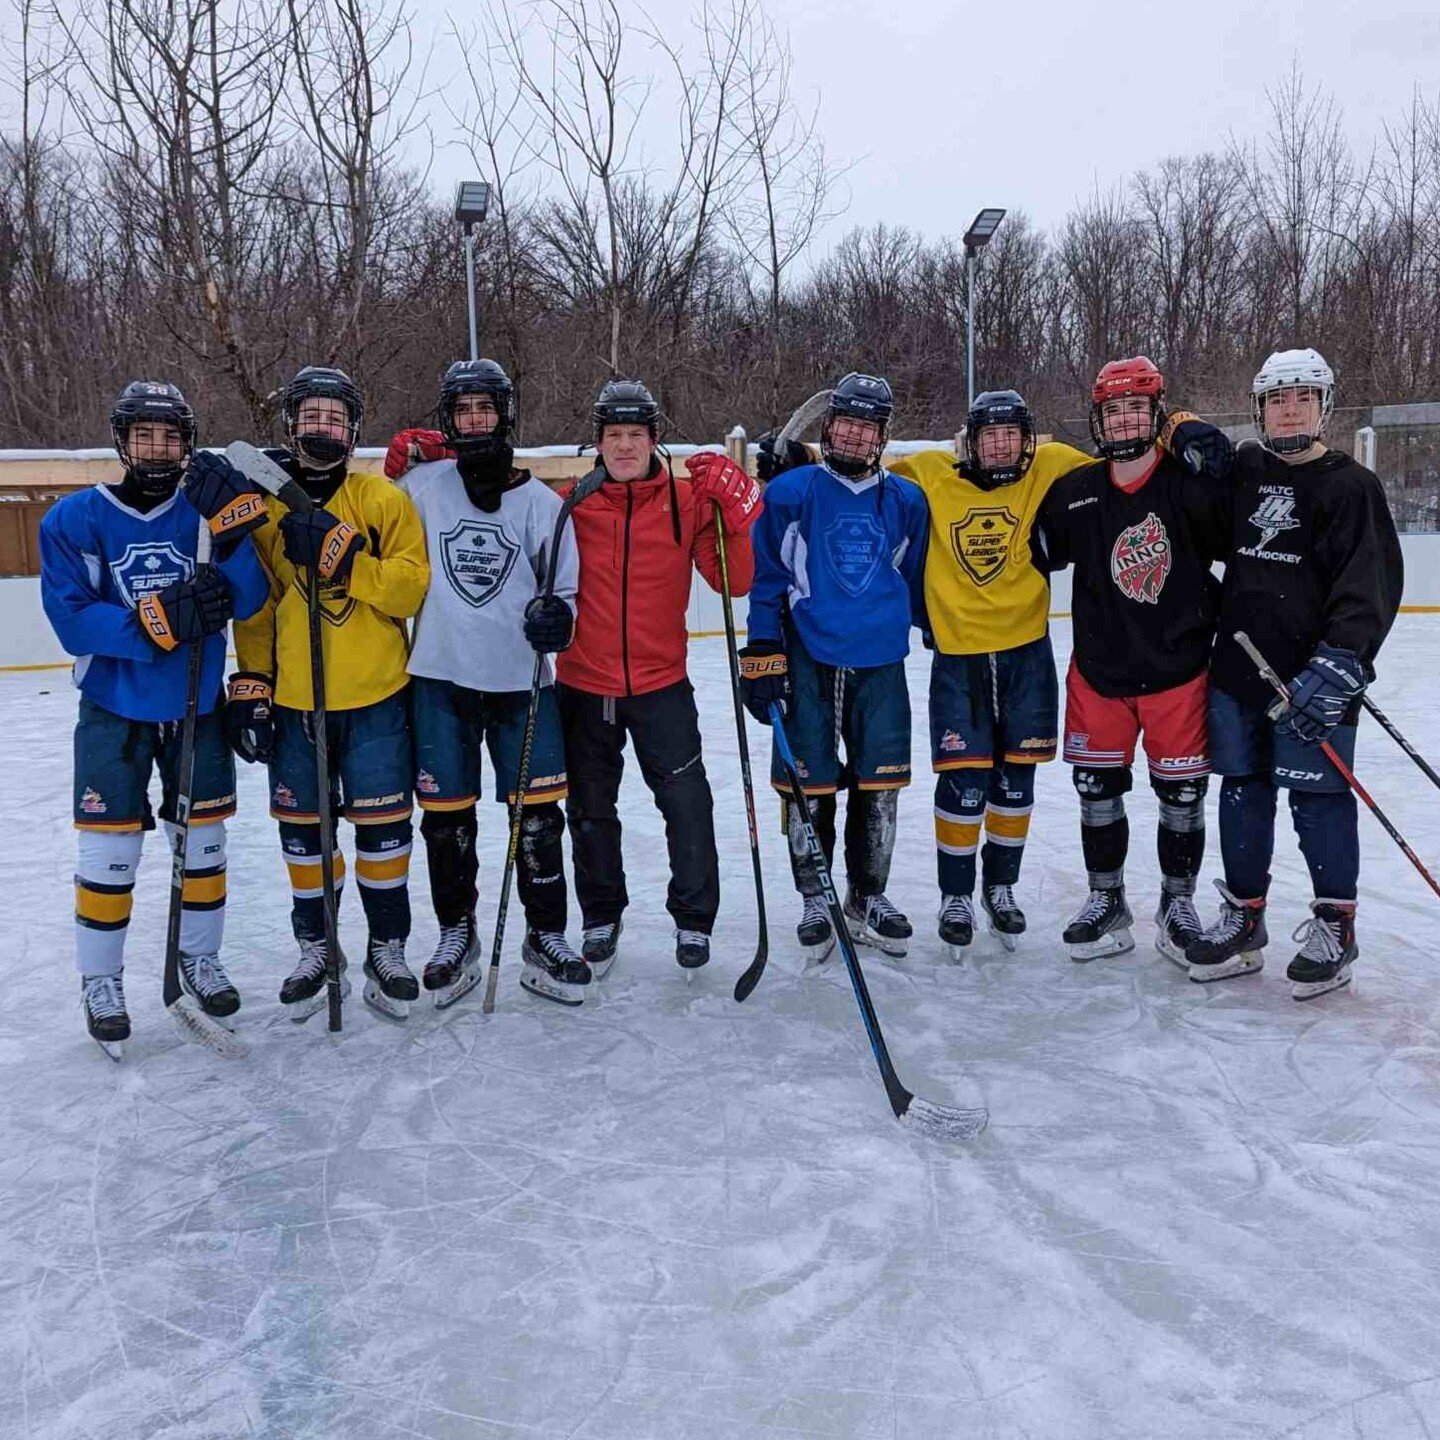 Sad to see #ODR season wrap up - had a blast with this crew at our #ODR Training Group.
:
:
#theINNOway #AdvancingEveryPlayer #hockey #hockeyskills #skillday #totalhockey #HockeyIsFun